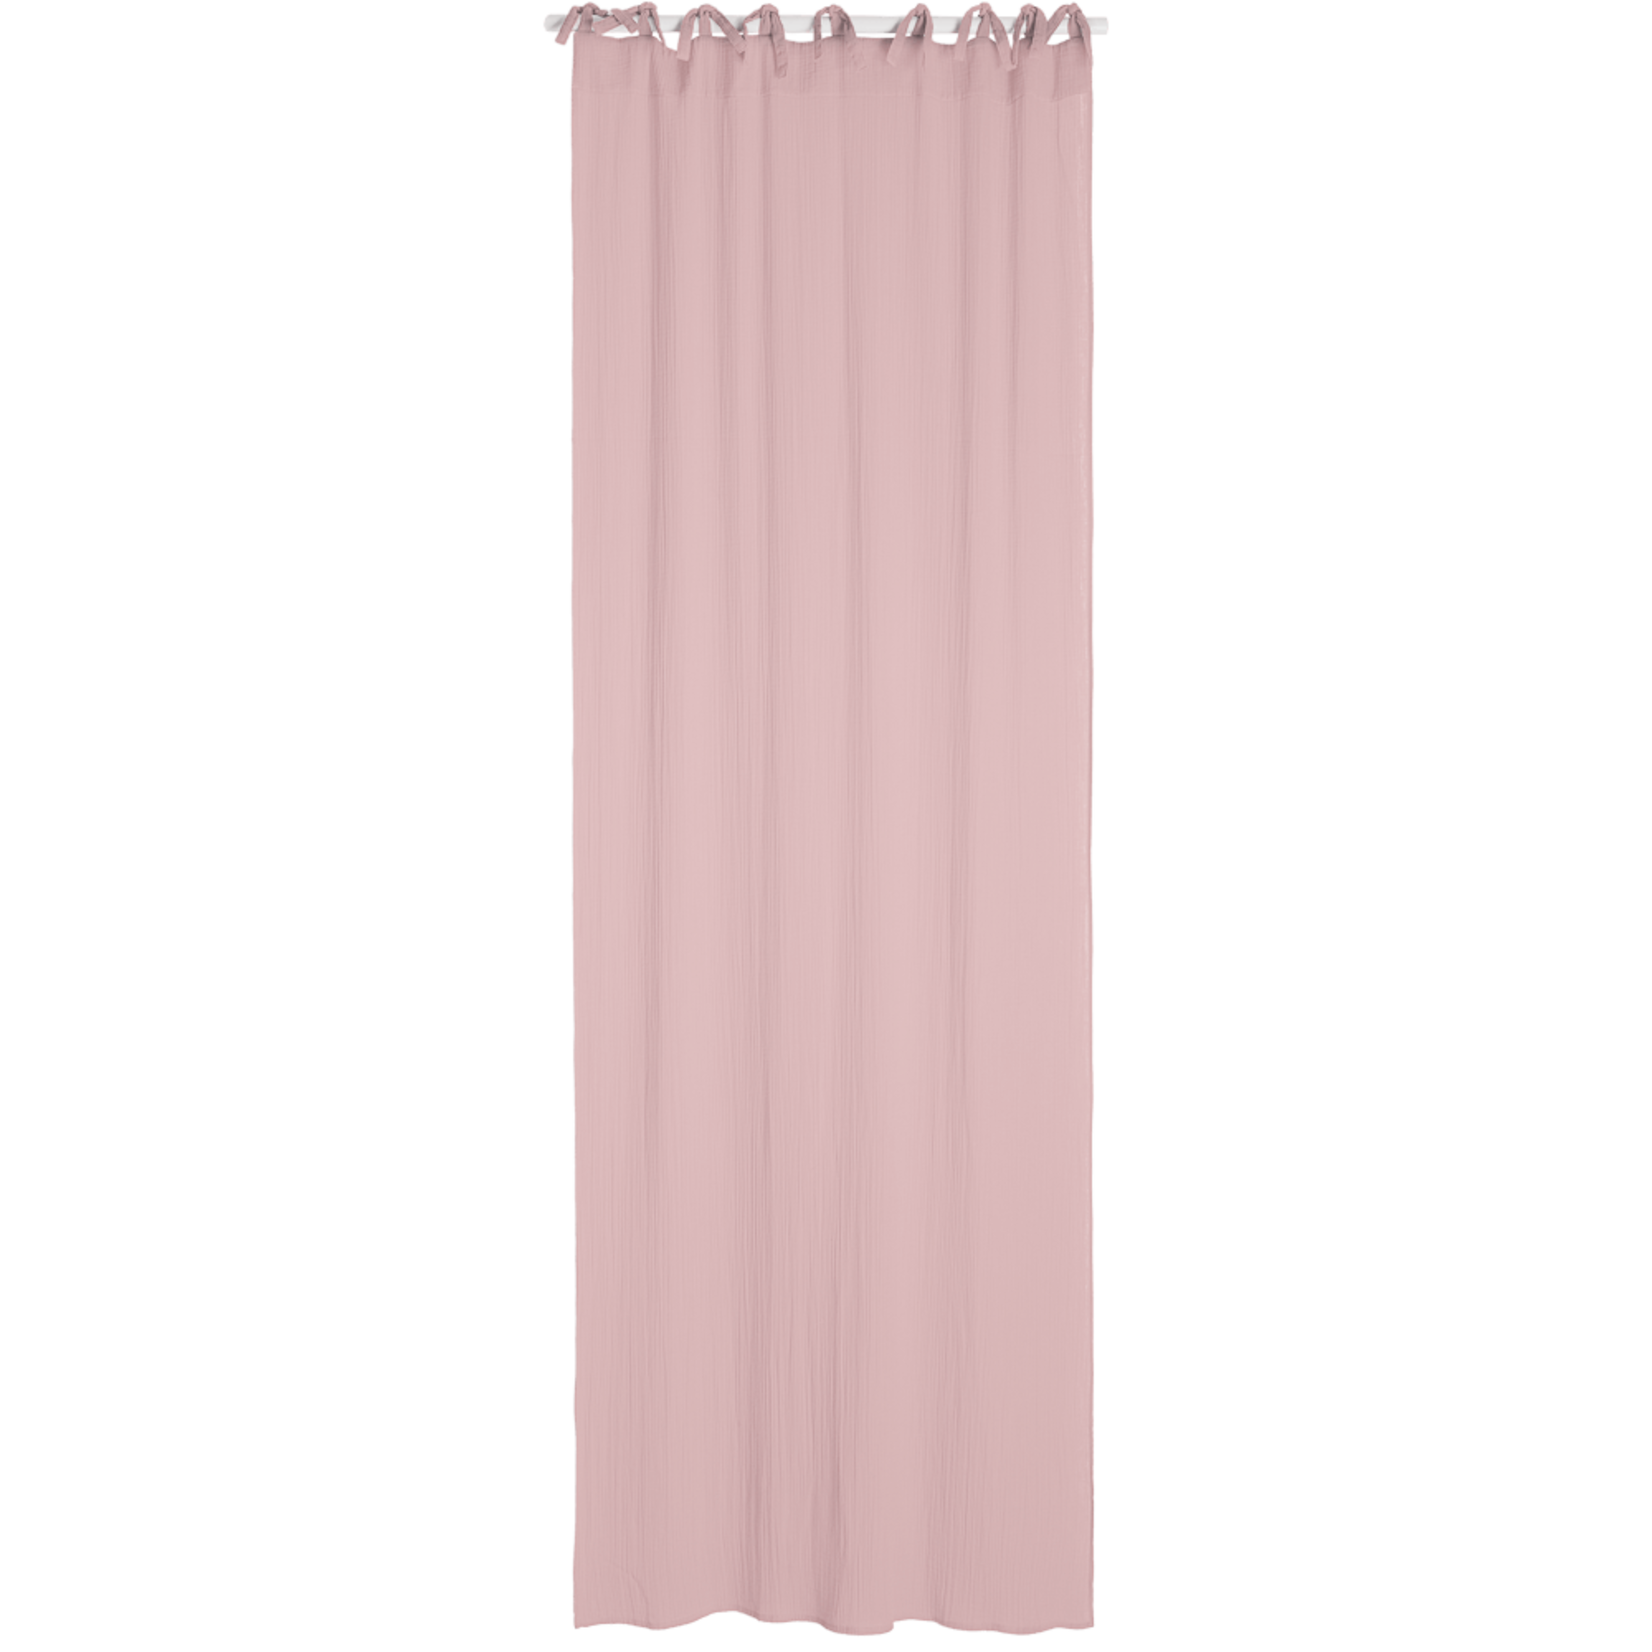 Dusty Rose Curtain